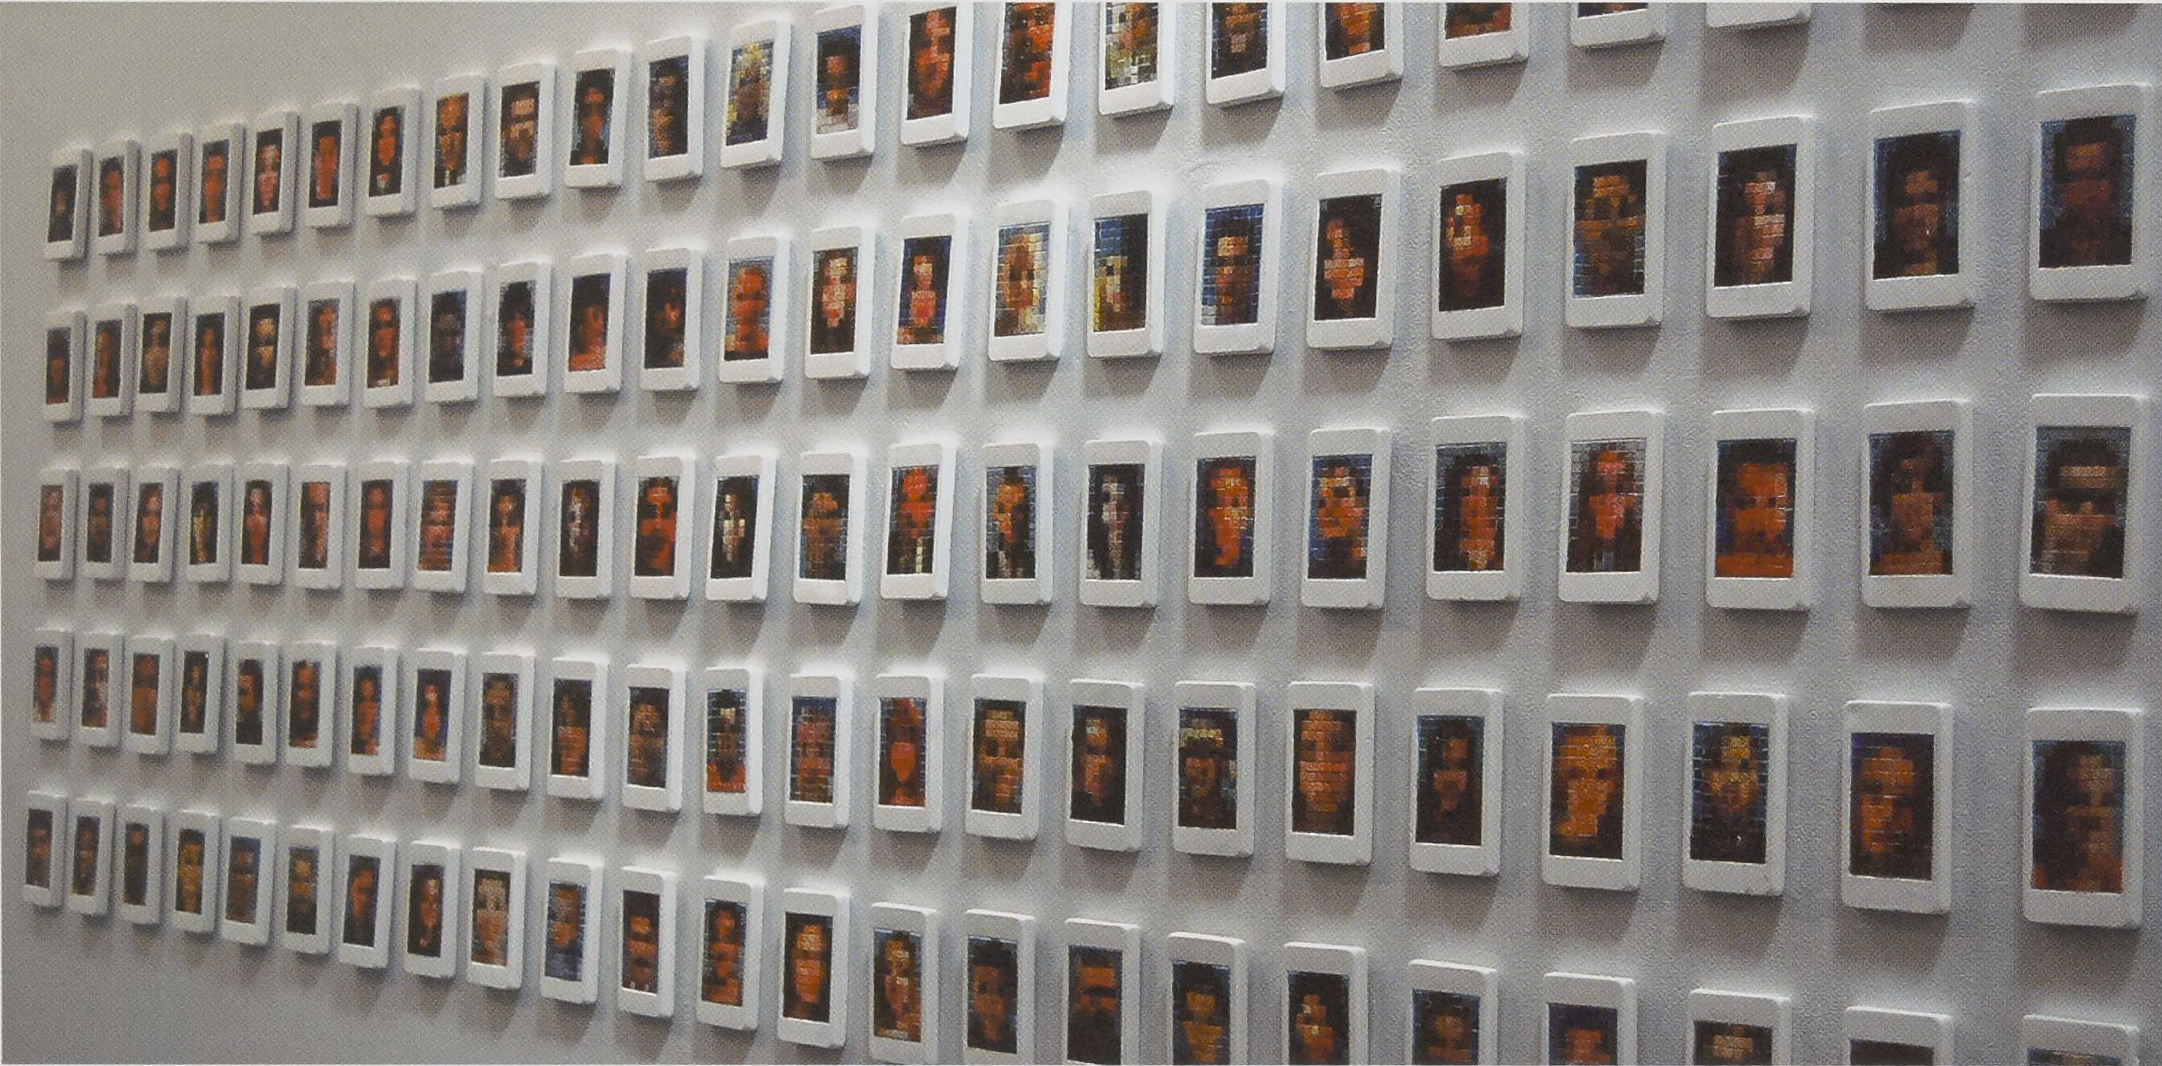 iPhone Portrait Series, 2007-8. Installation view, each piece 4.5 x 2.5 in.